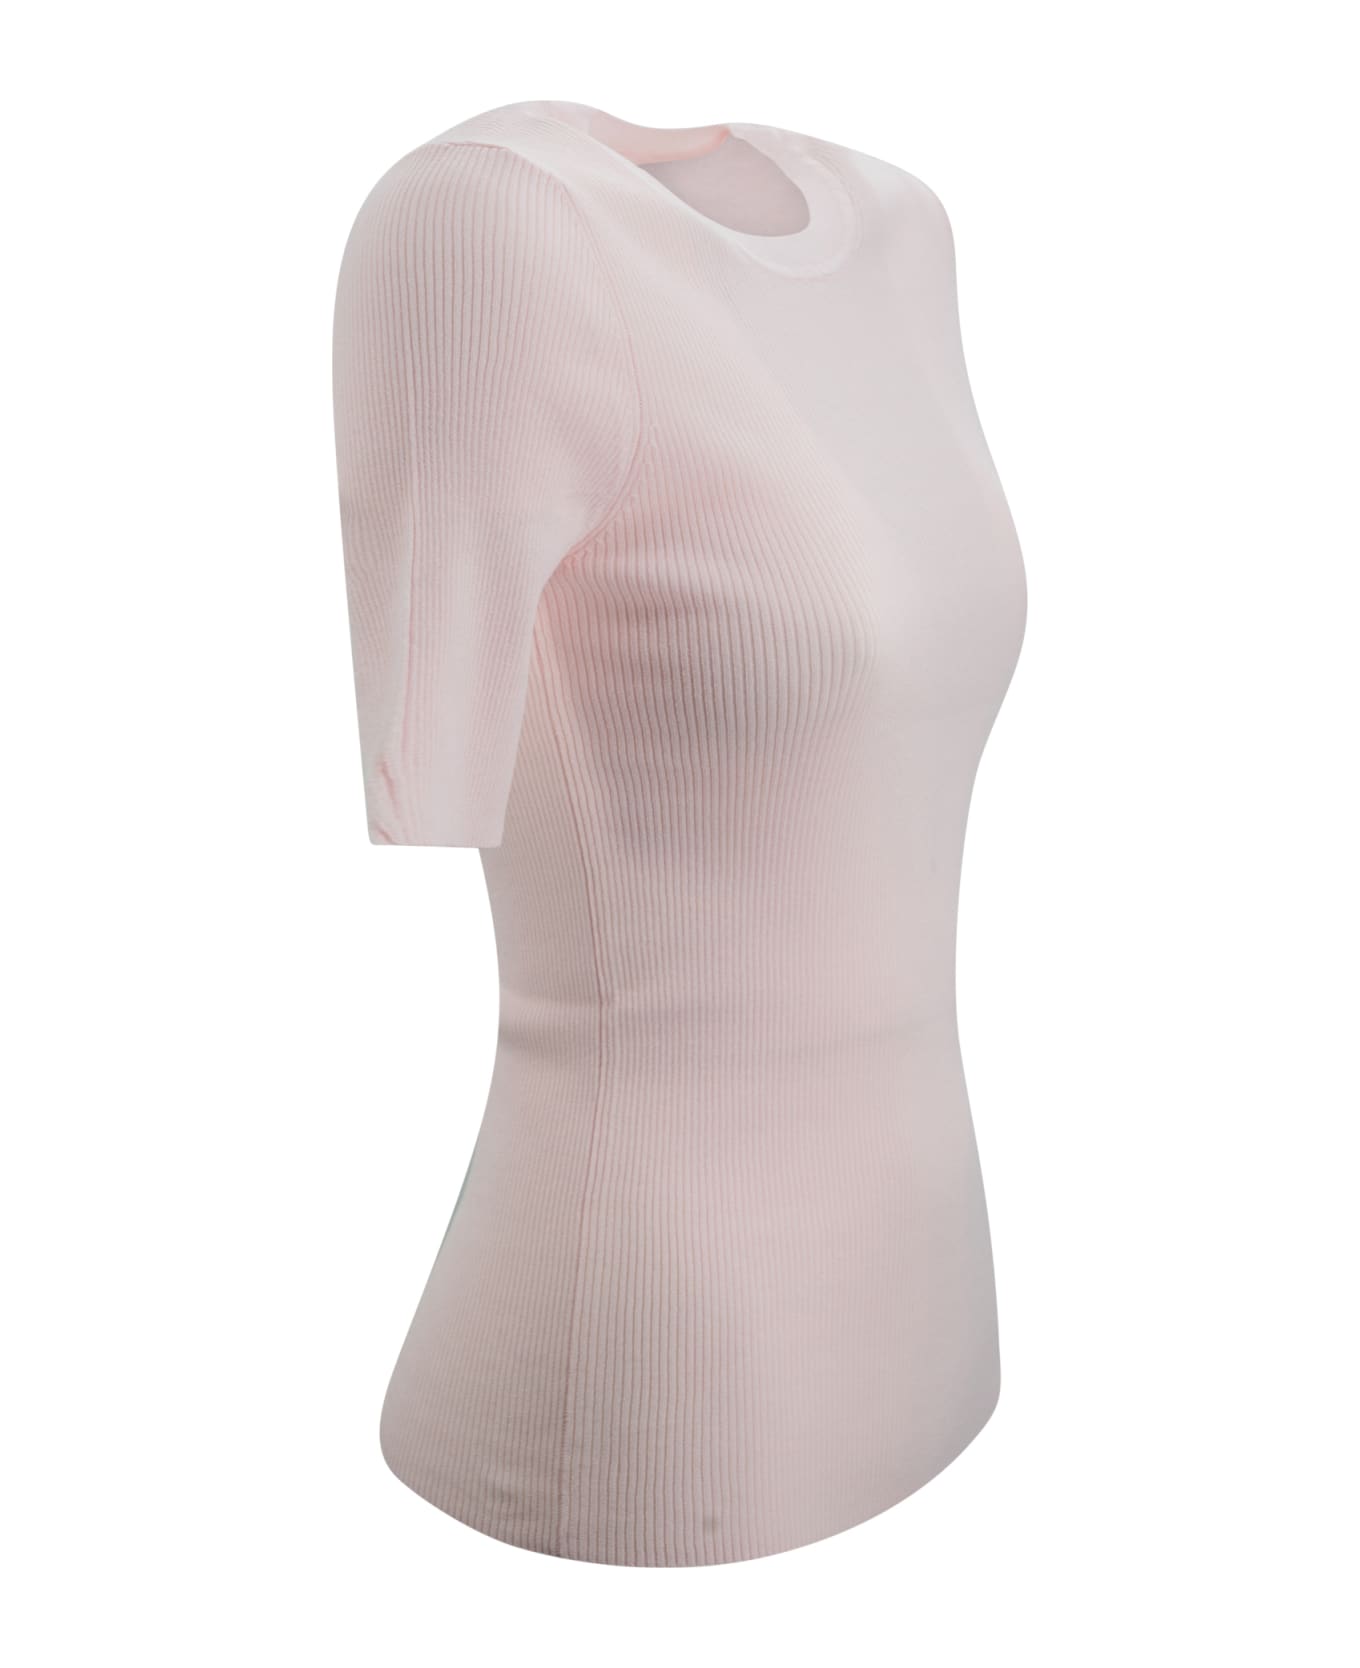 Parosh Ribbed-knit Top - Pink ニットウェア